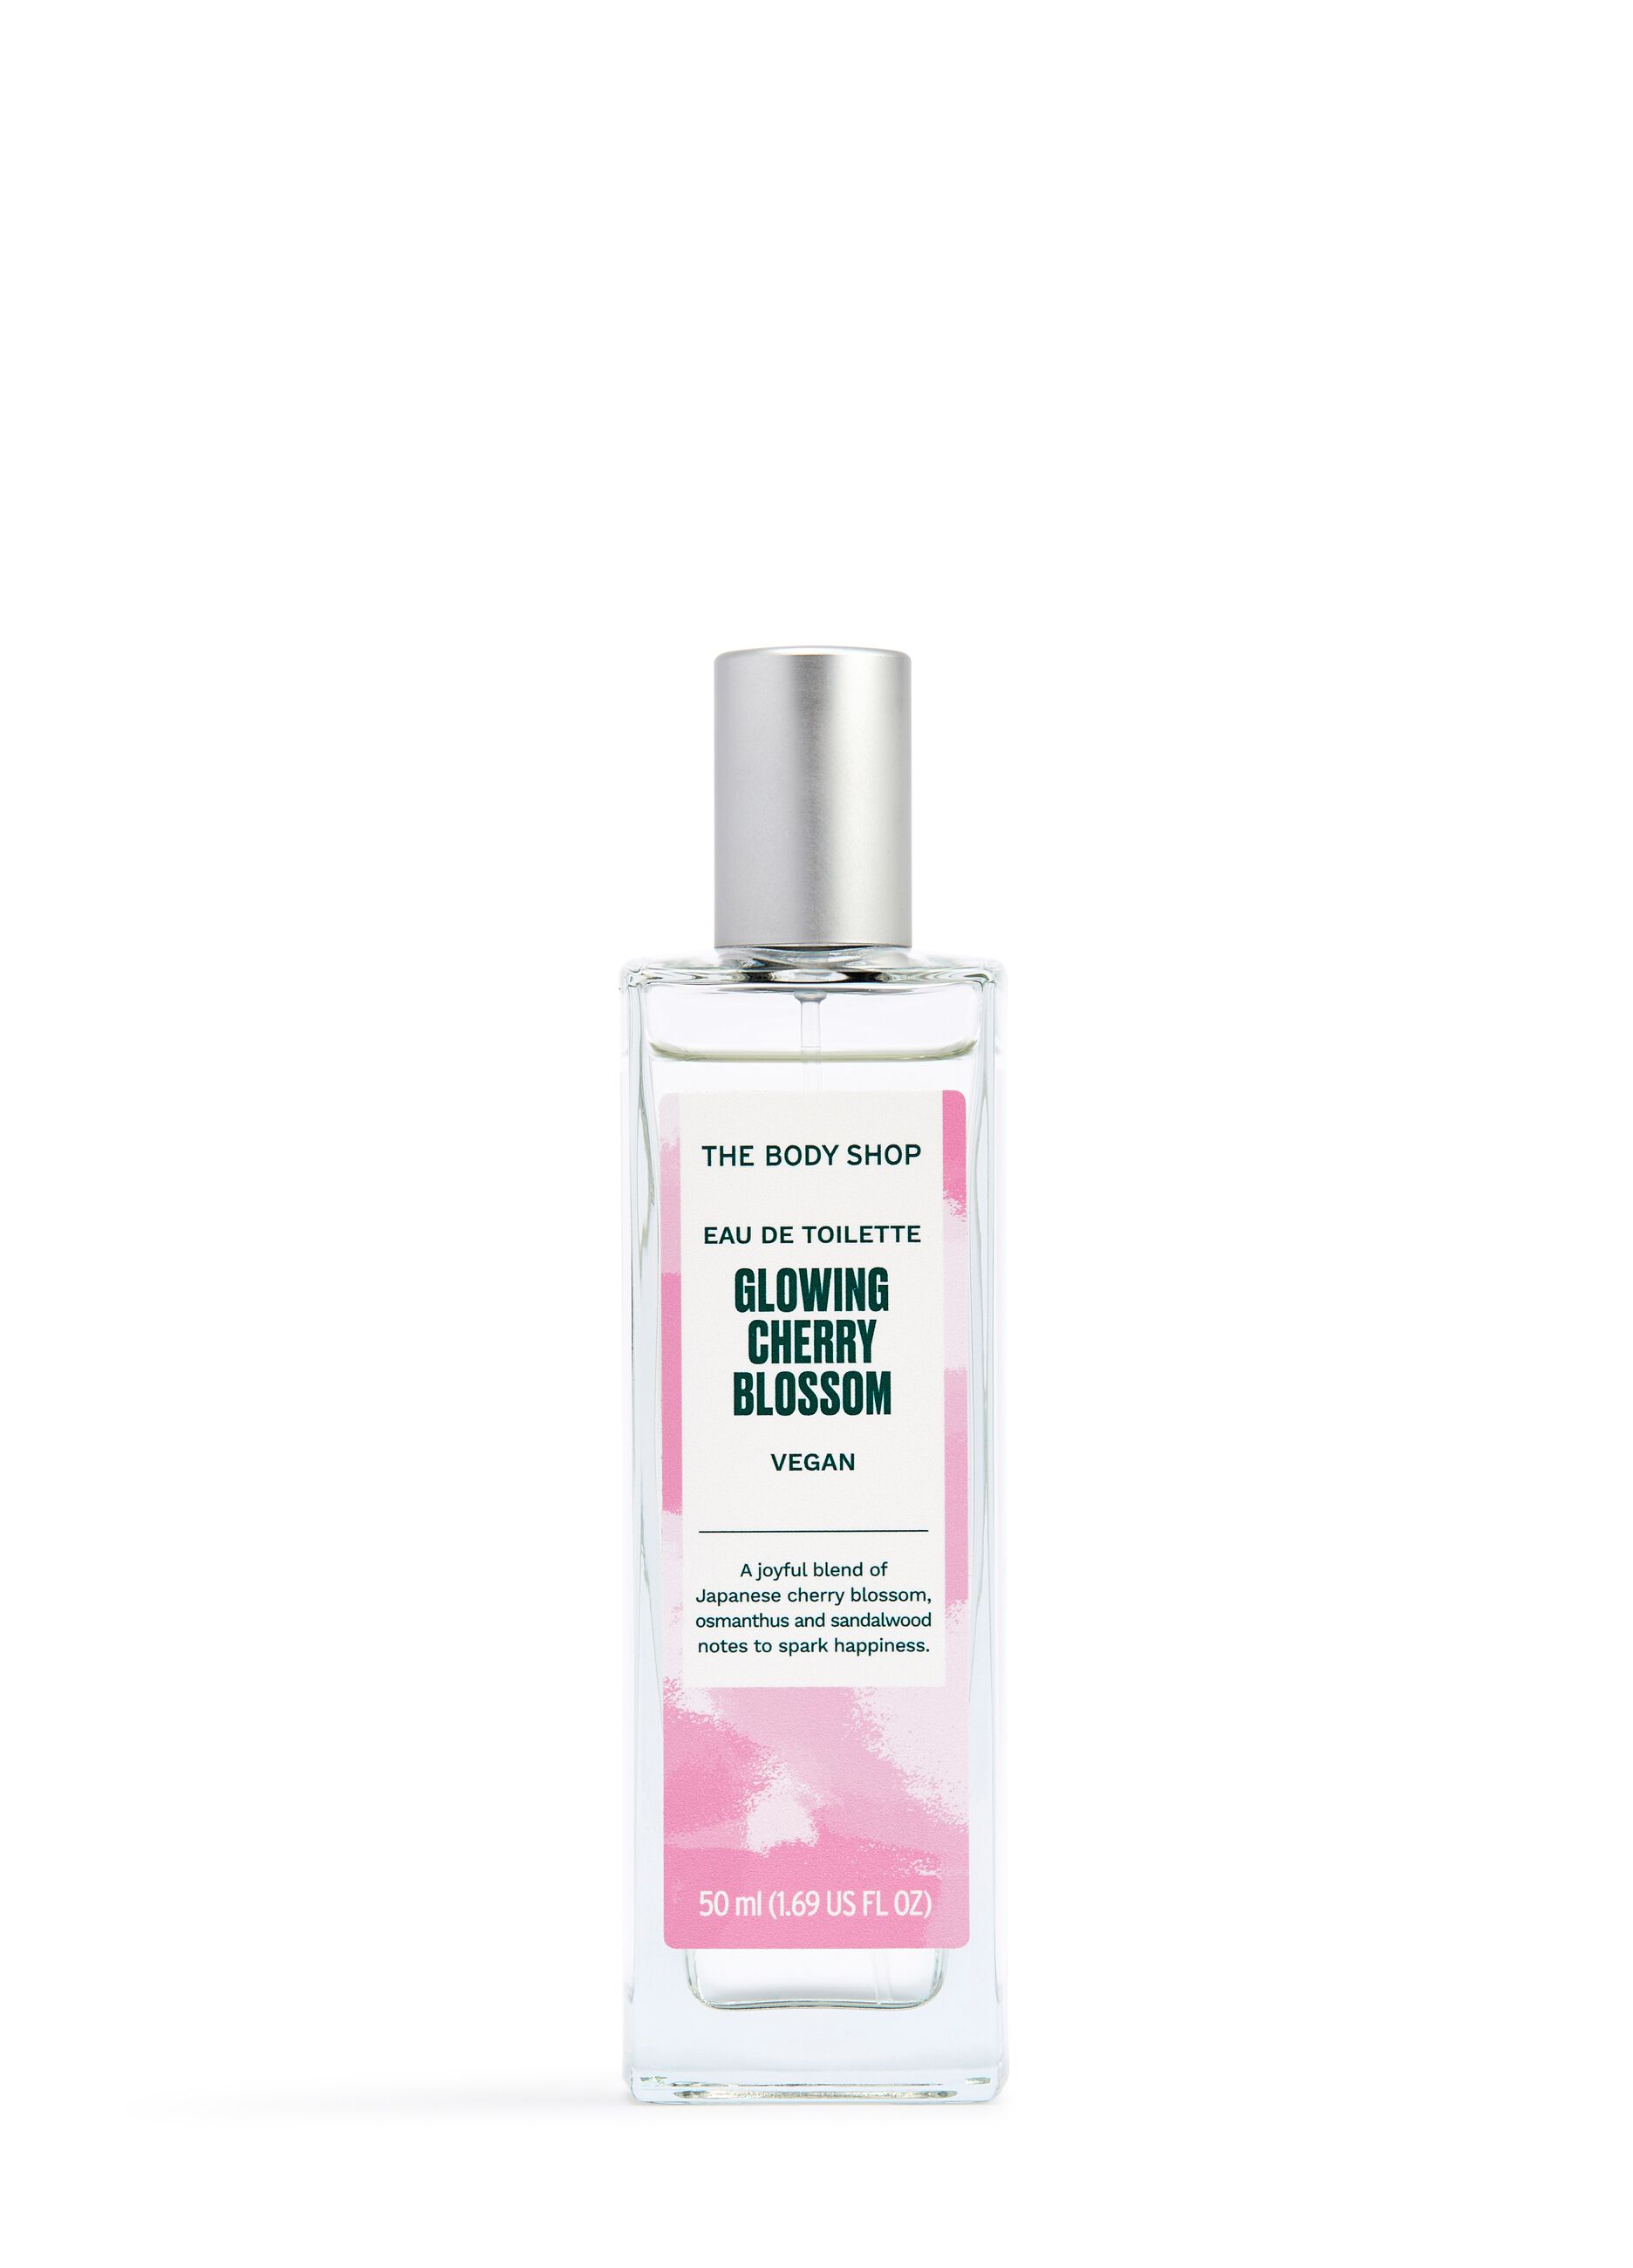 The Body Shop Glowing Cherry Blossom Eau de Toilette 50ml